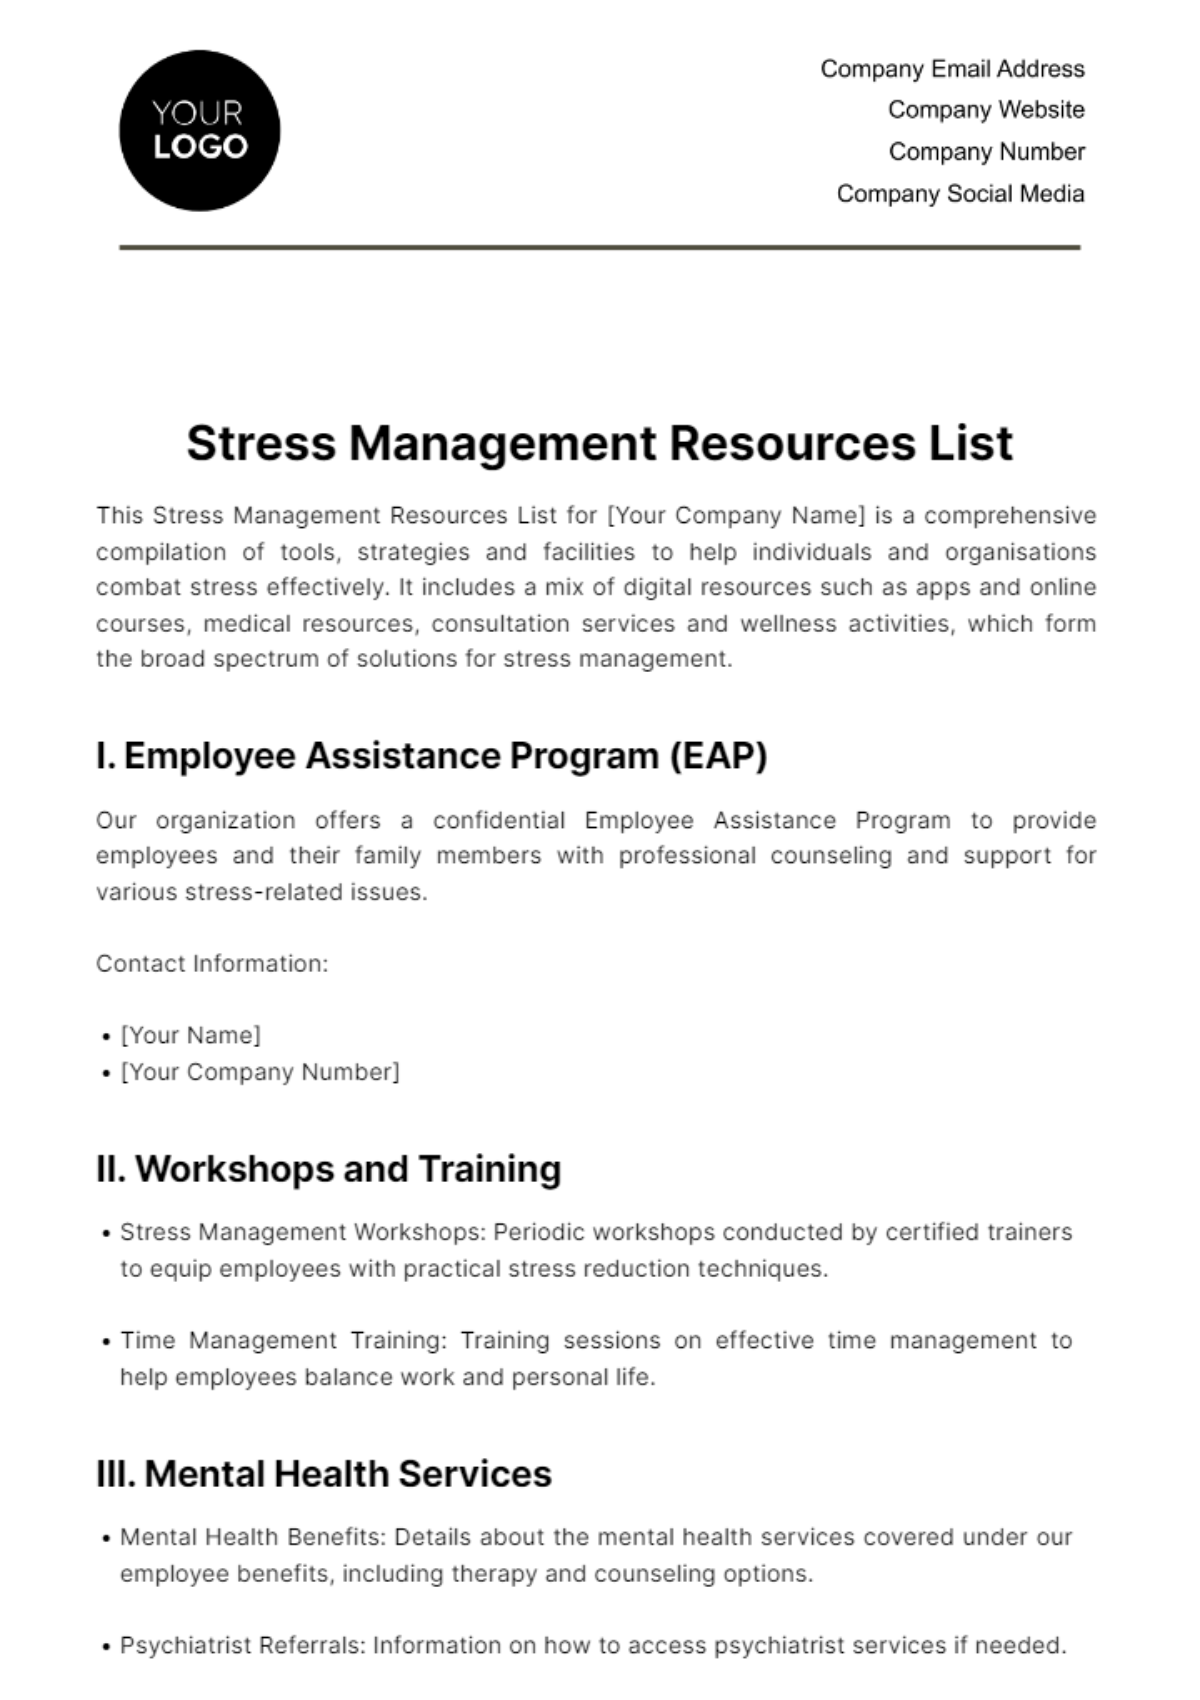 Free Stress Management Resources List HR Template